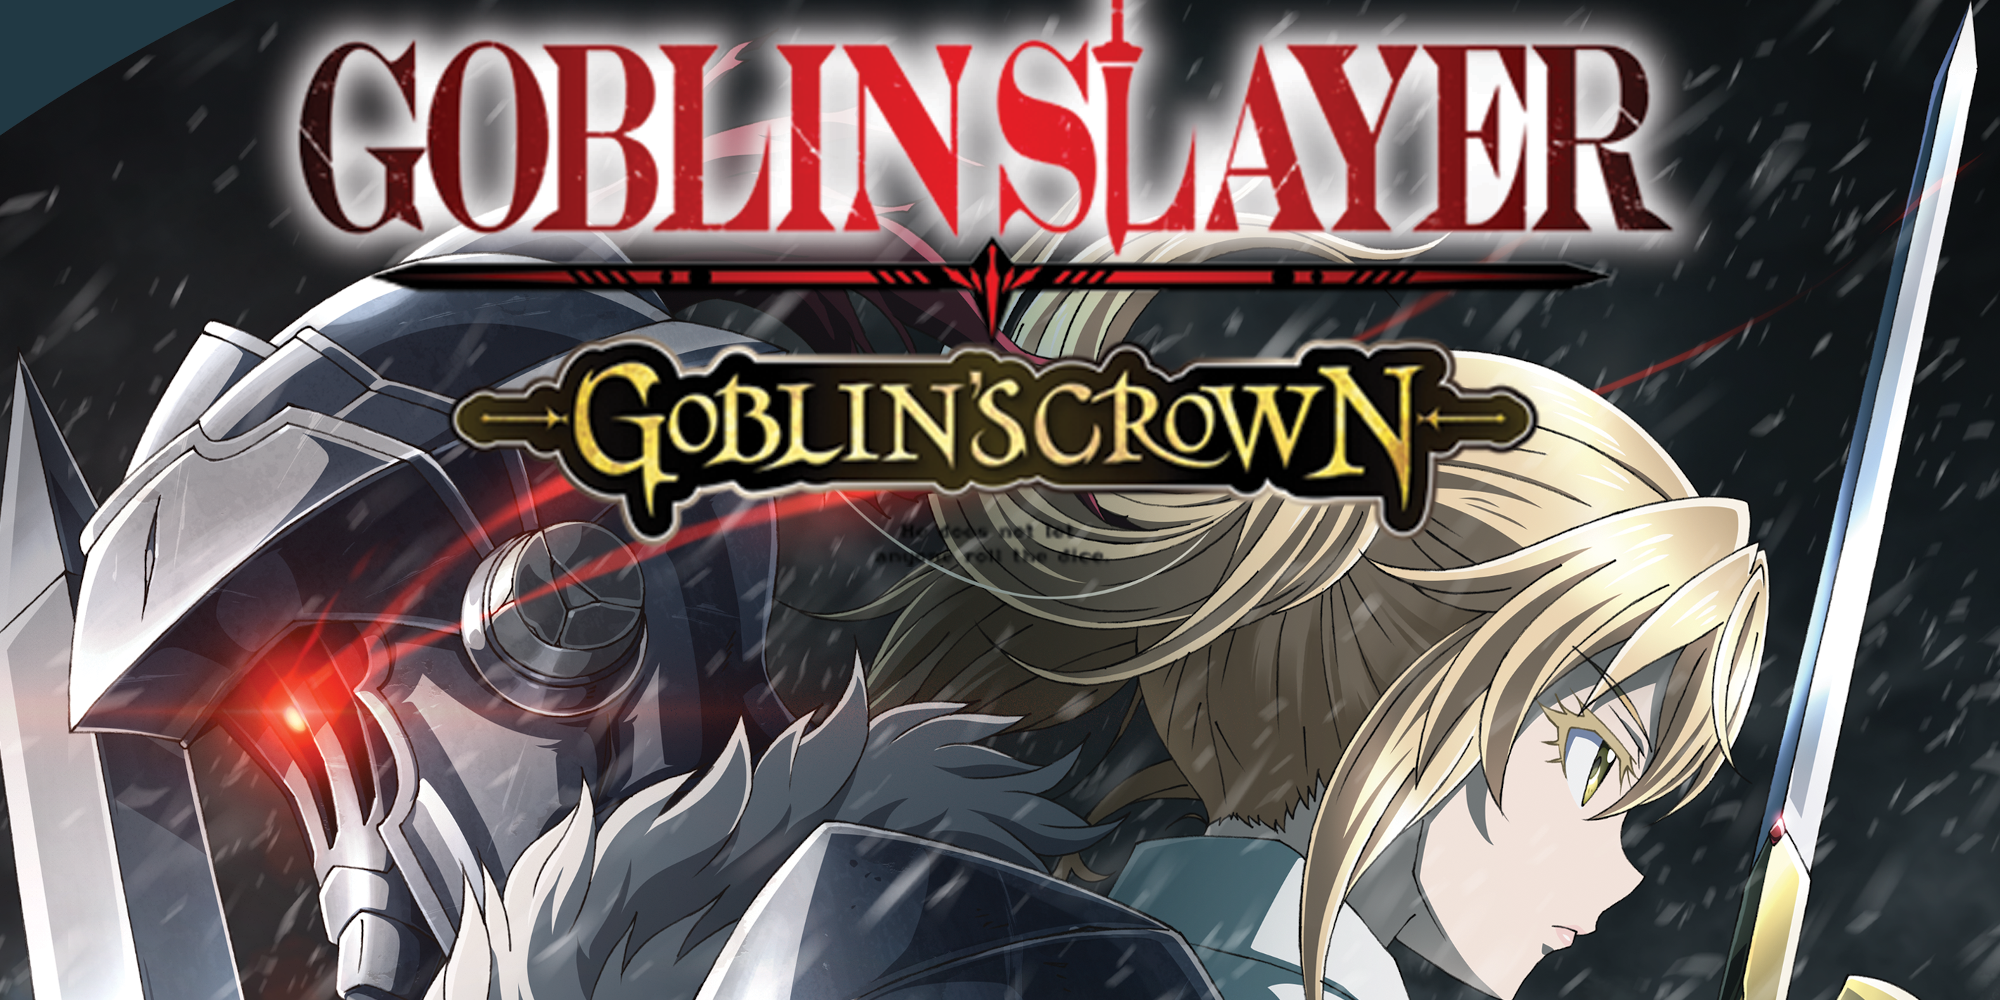 GOBLIN SLAYER Season 2 Anime: Where to Watch, Trailers, Cast & More -  Crunchyroll News